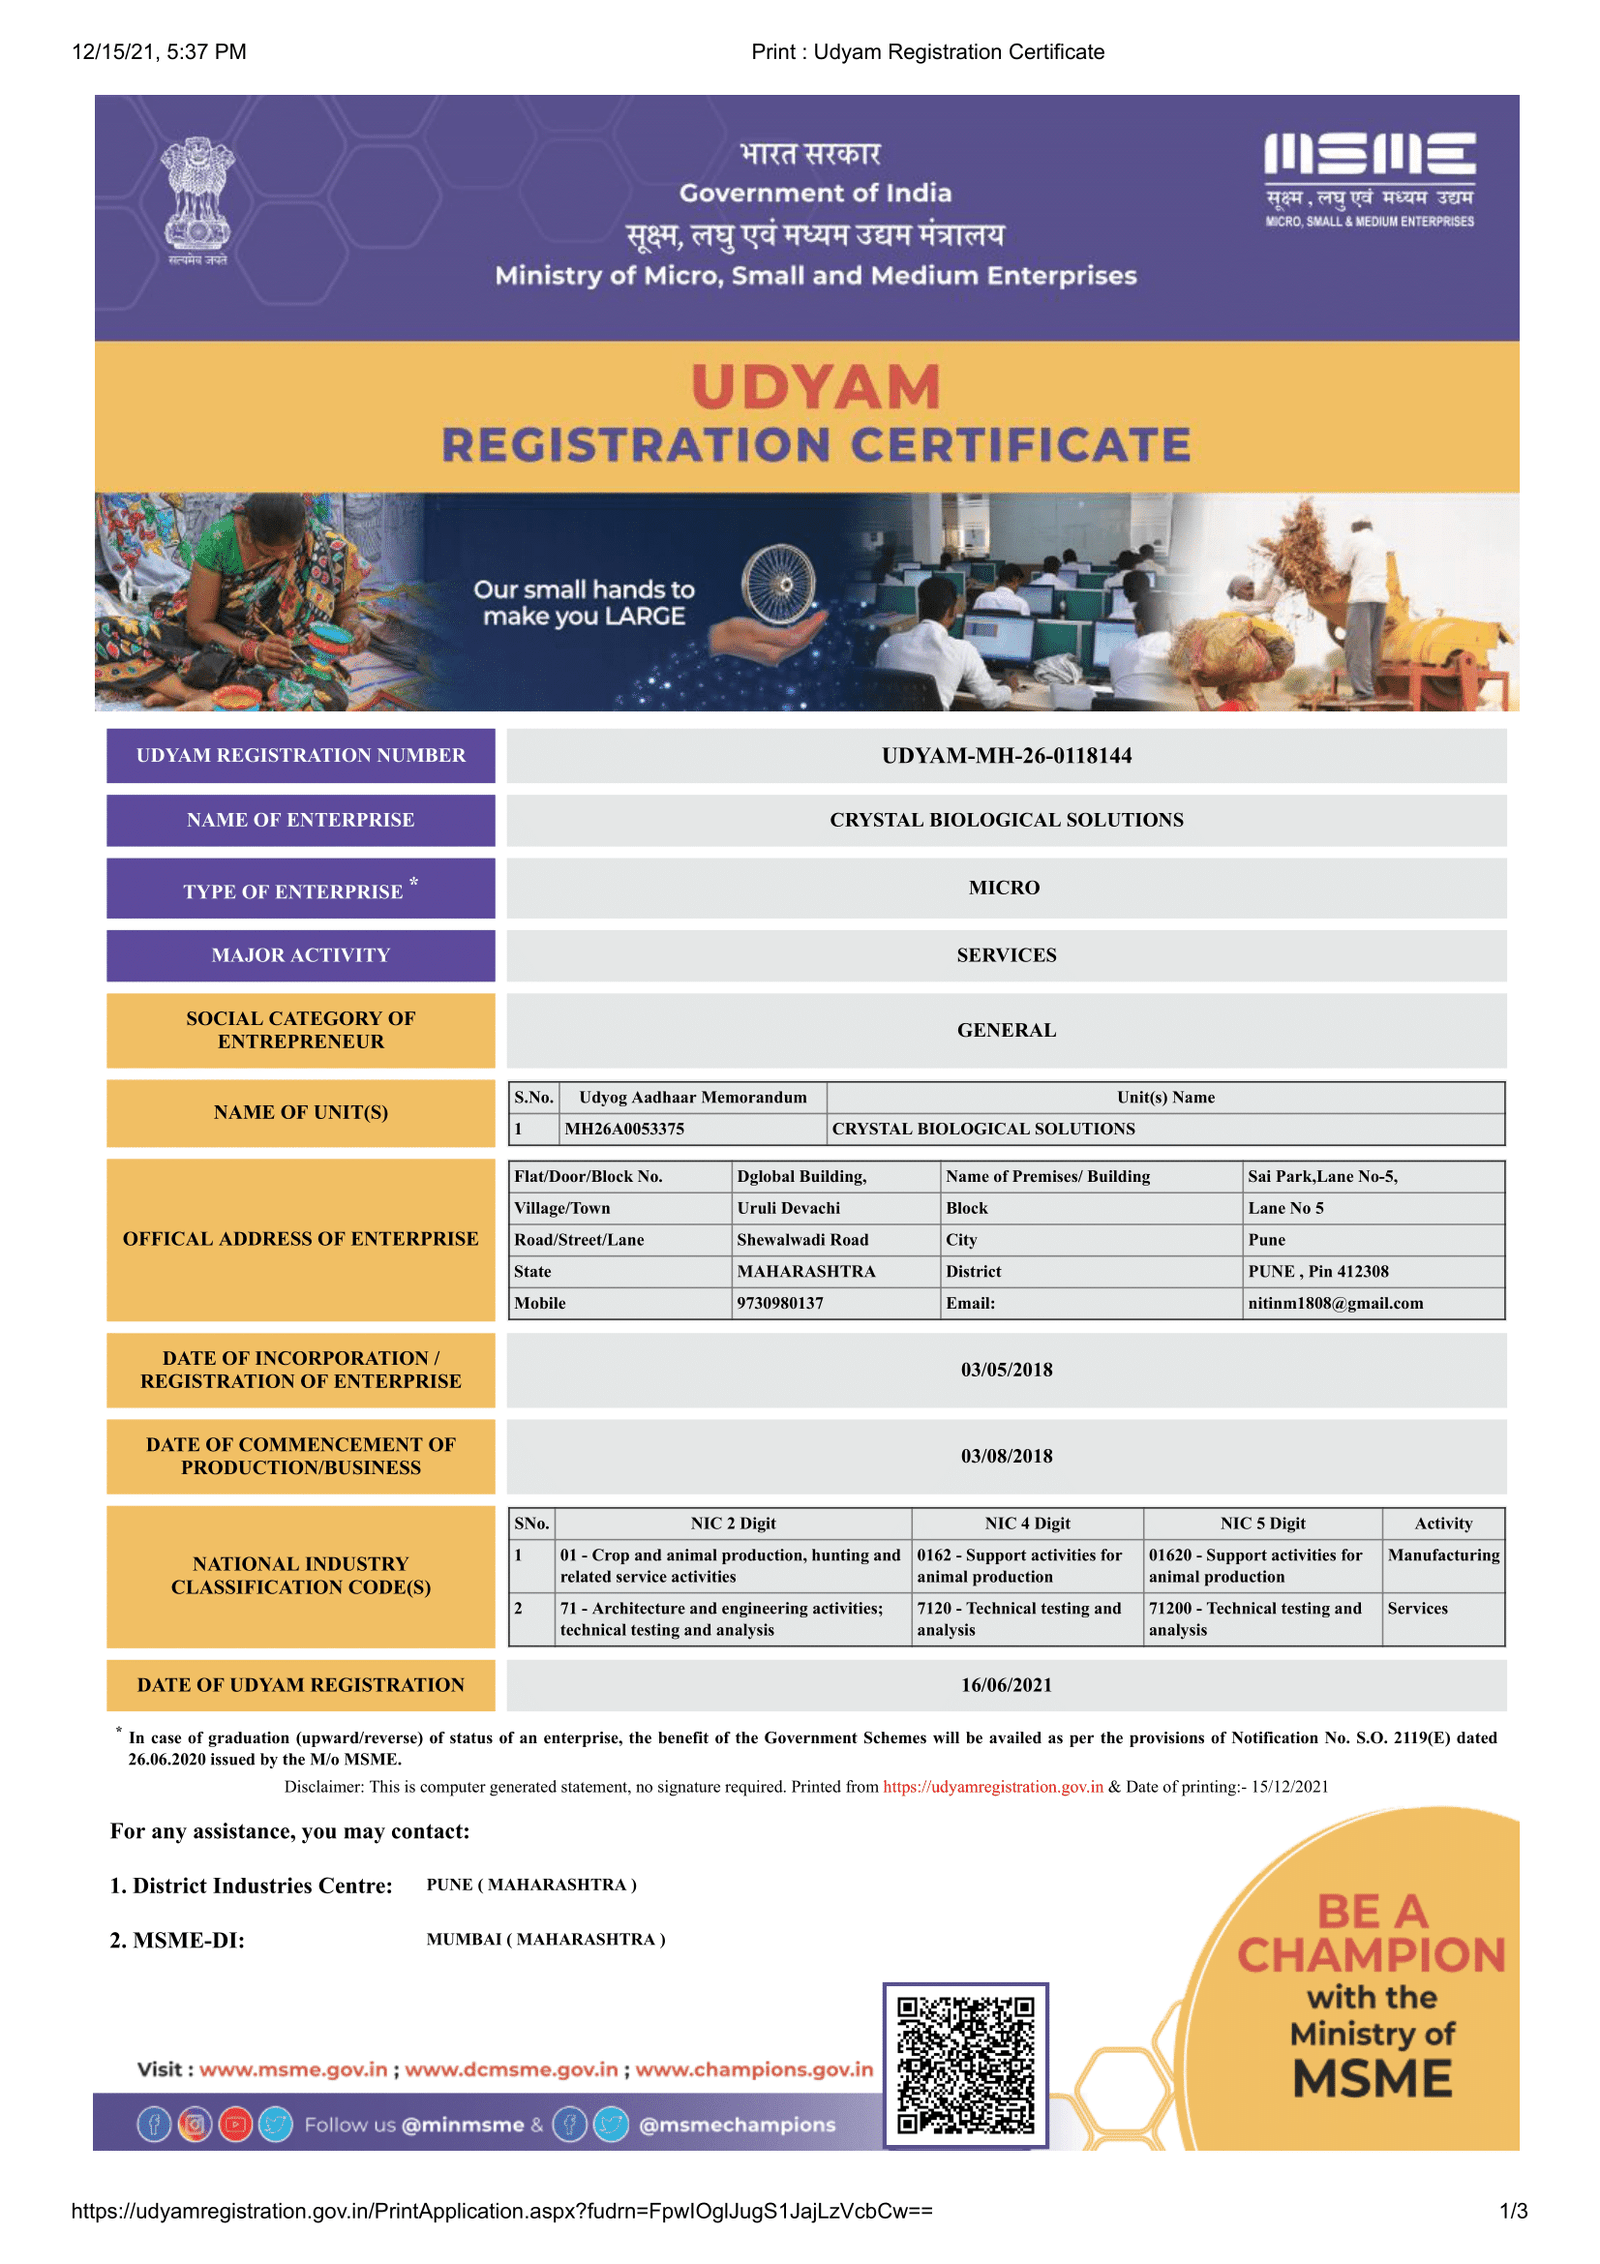 udyam certificate-1